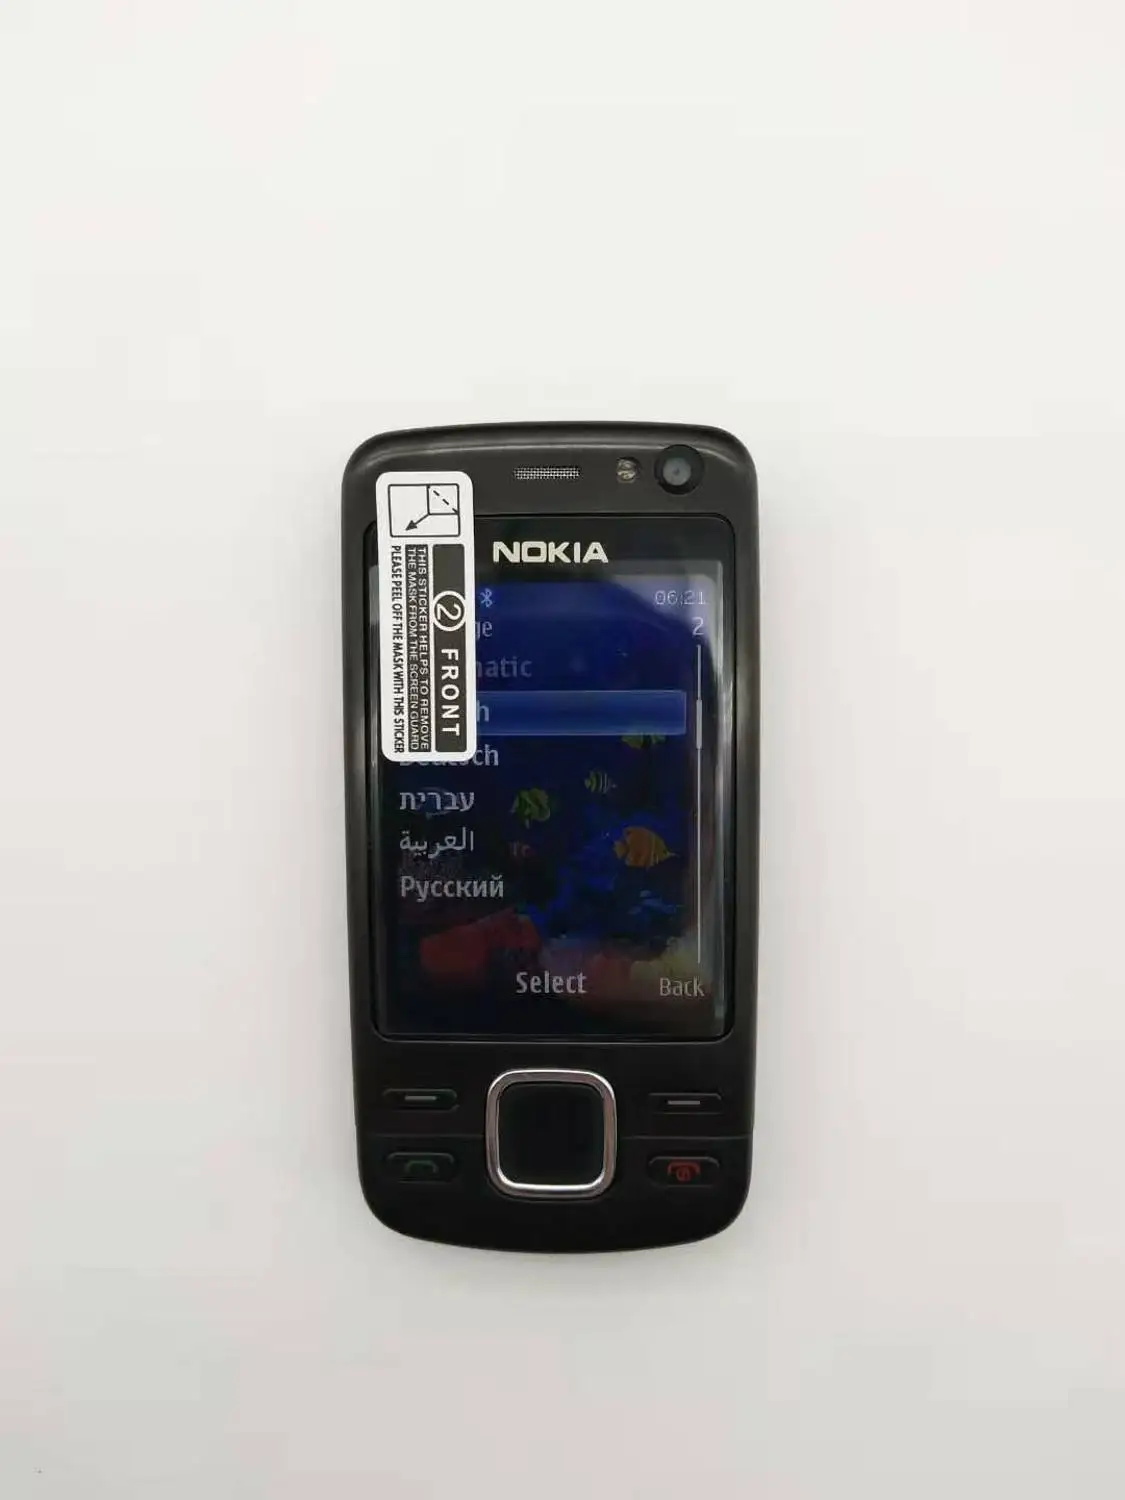 nokia 6600i refurbished original phone nokia 6600i cell phone black color in stock refurbished free global shipping